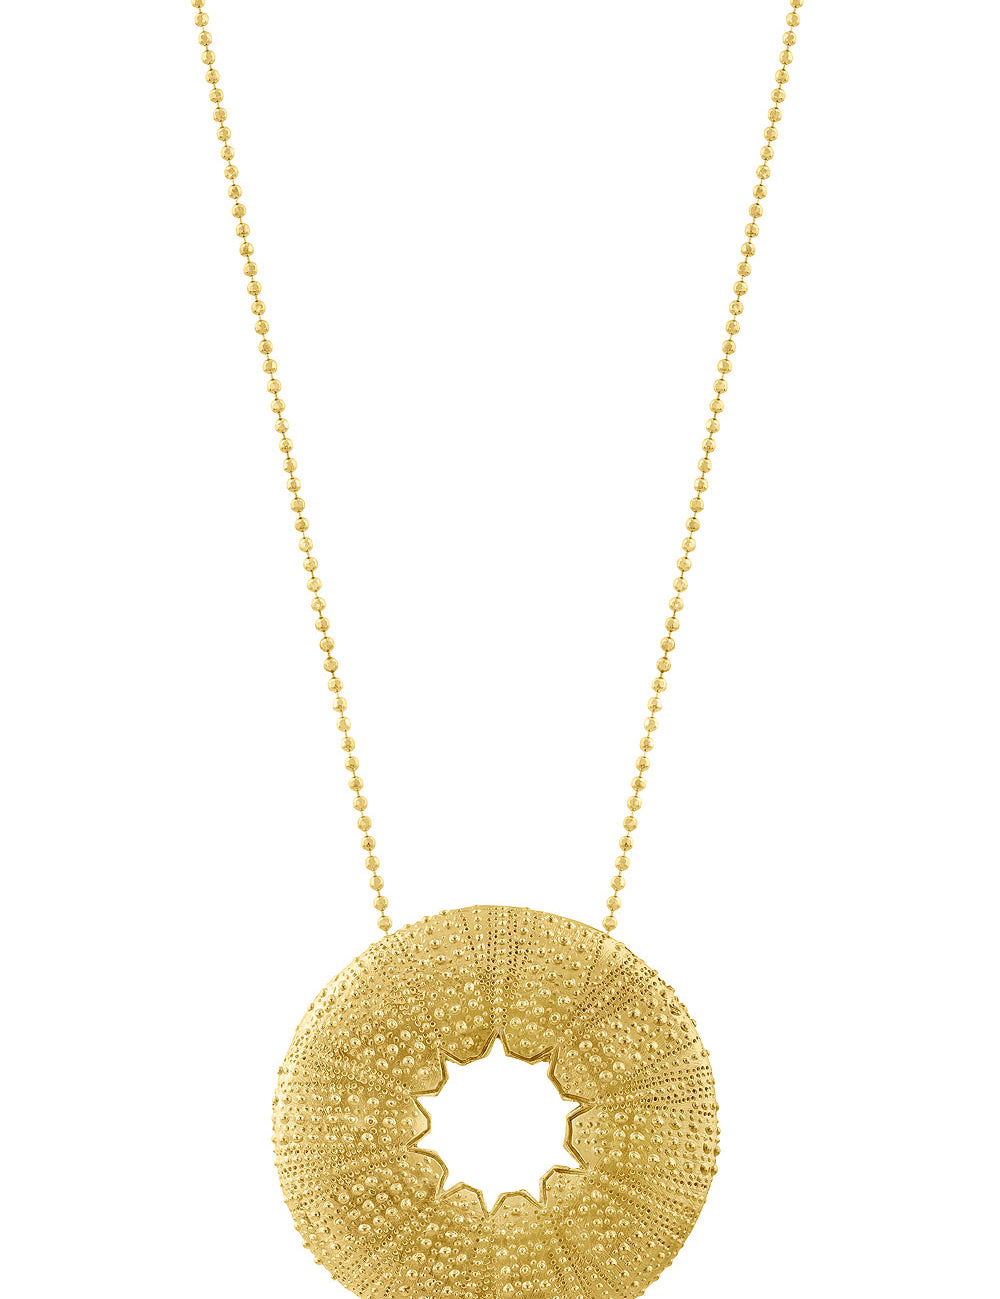 Necklace Sea Urchin Large - Sophie Simone Designs